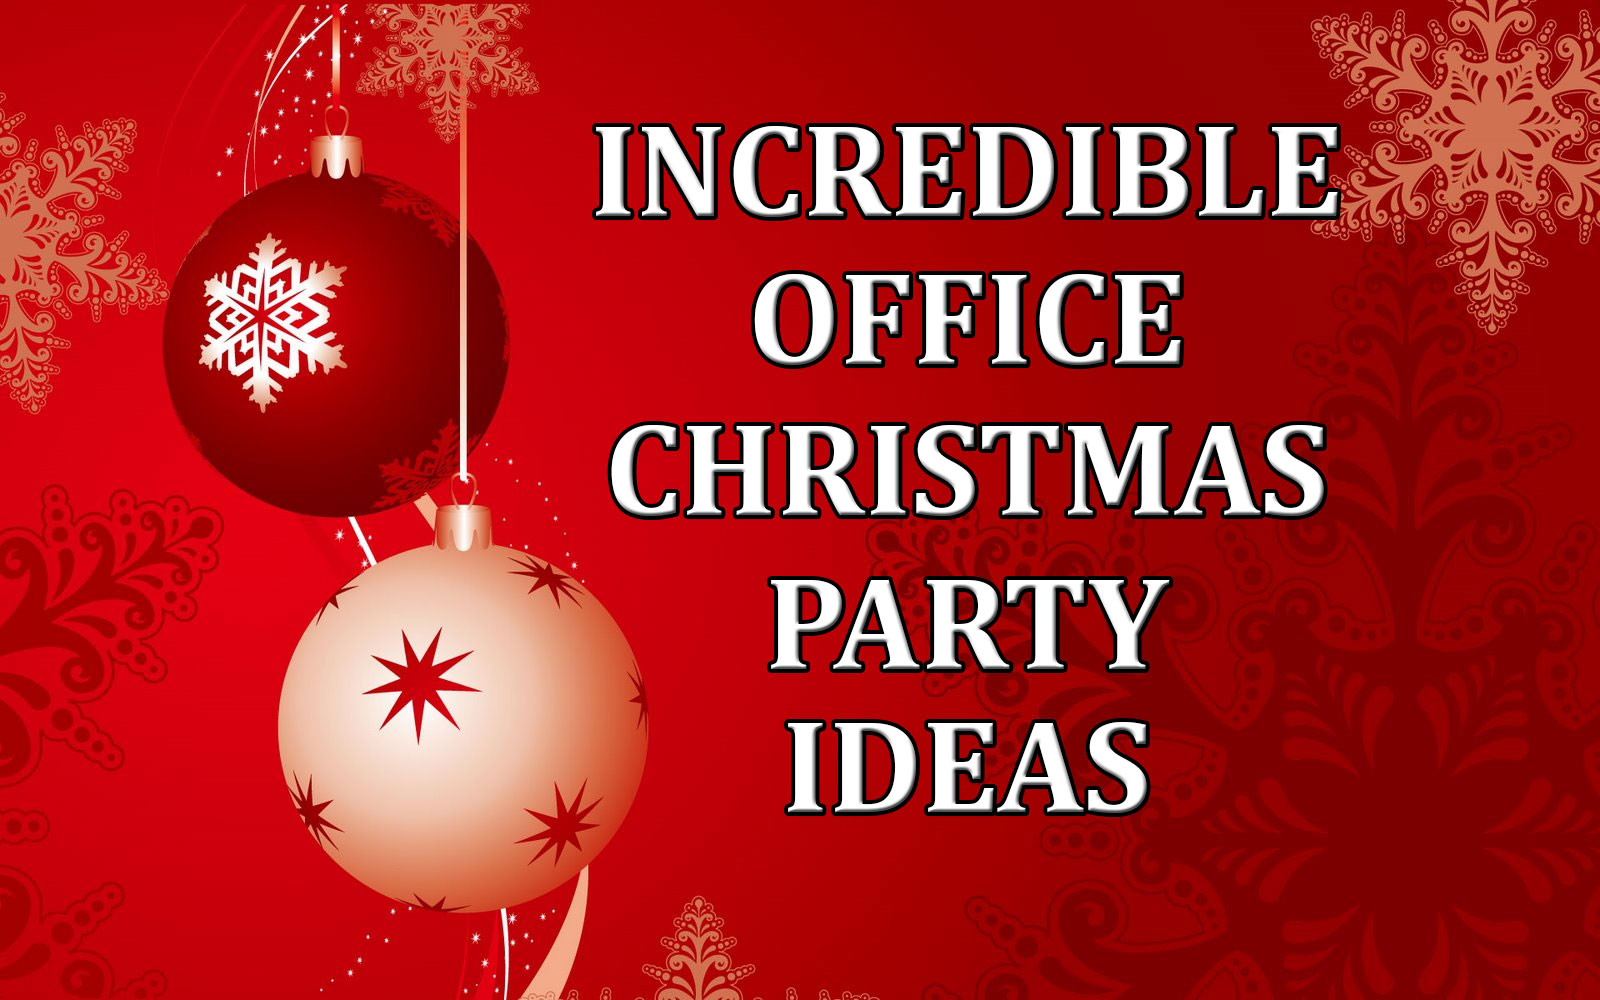 Fun Staff Christmas Party Ideas
 Incredible fice Christmas Party Ideas edy Ventriloquist